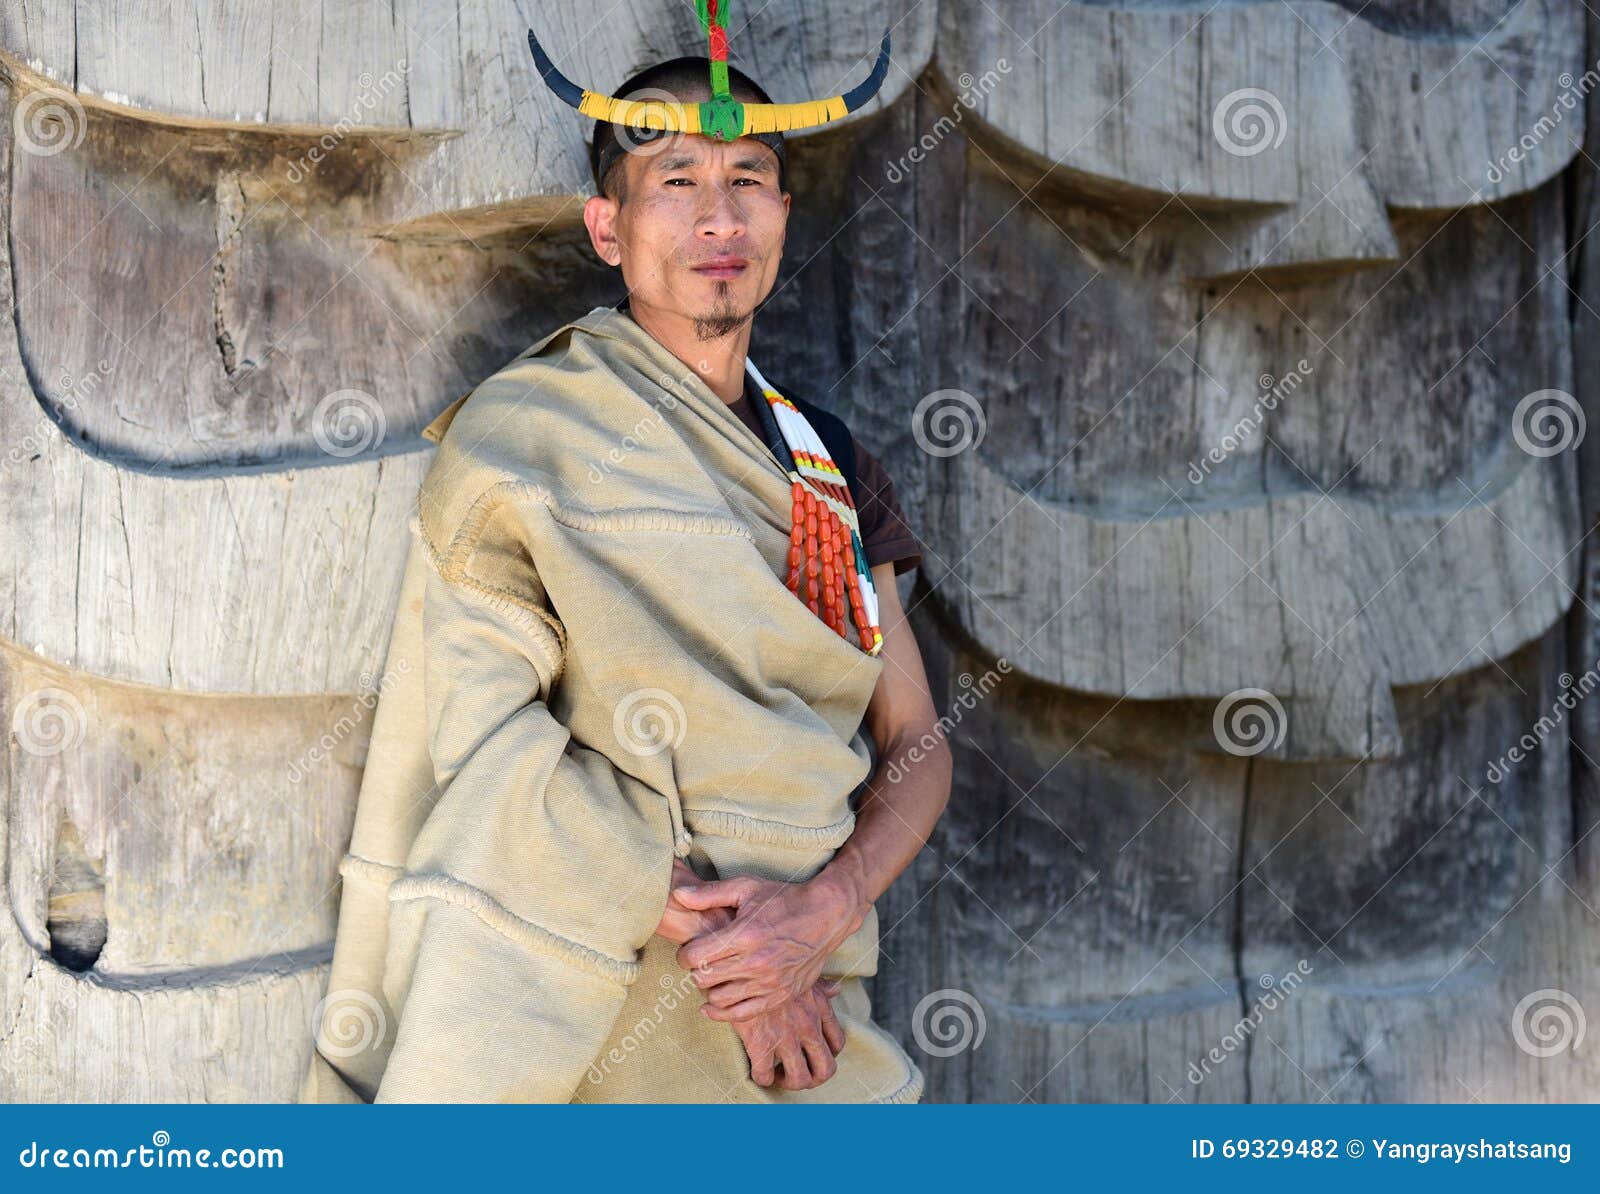 naga tribal man with traditional headgear